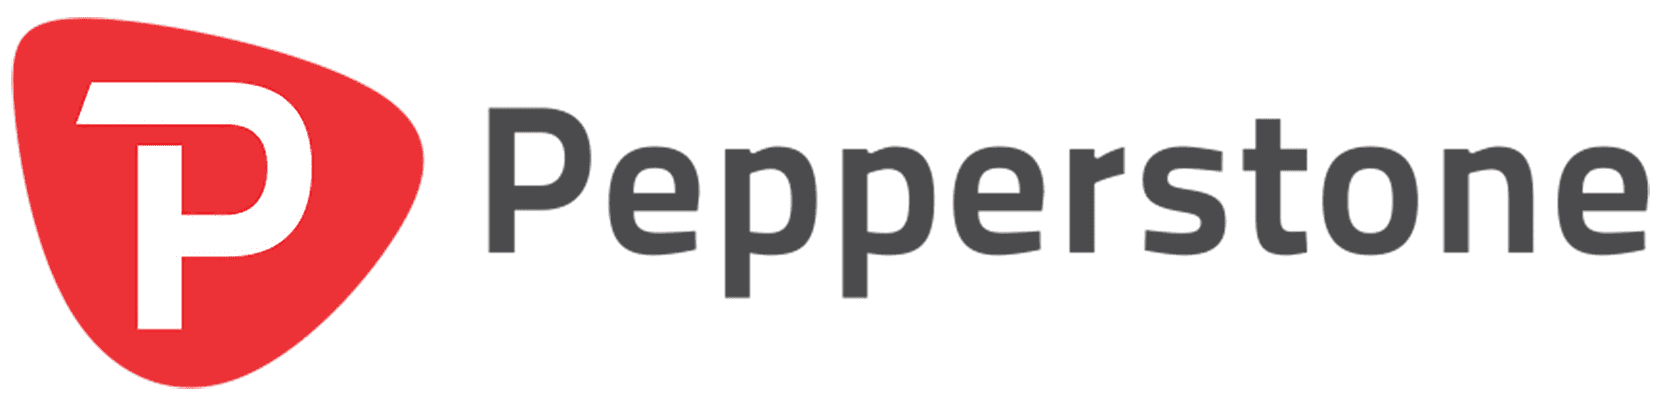 Pepperstone logo lang